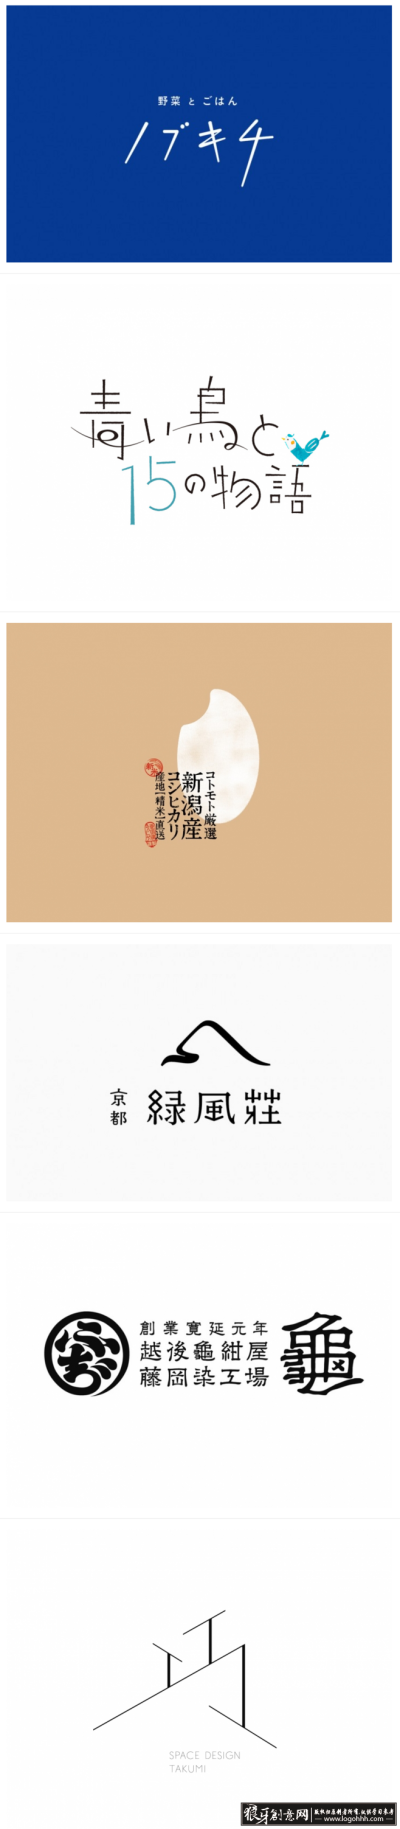 vi品牌设计 日本的一些标志设计欣赏 创意日本logo设计作品 简约日本